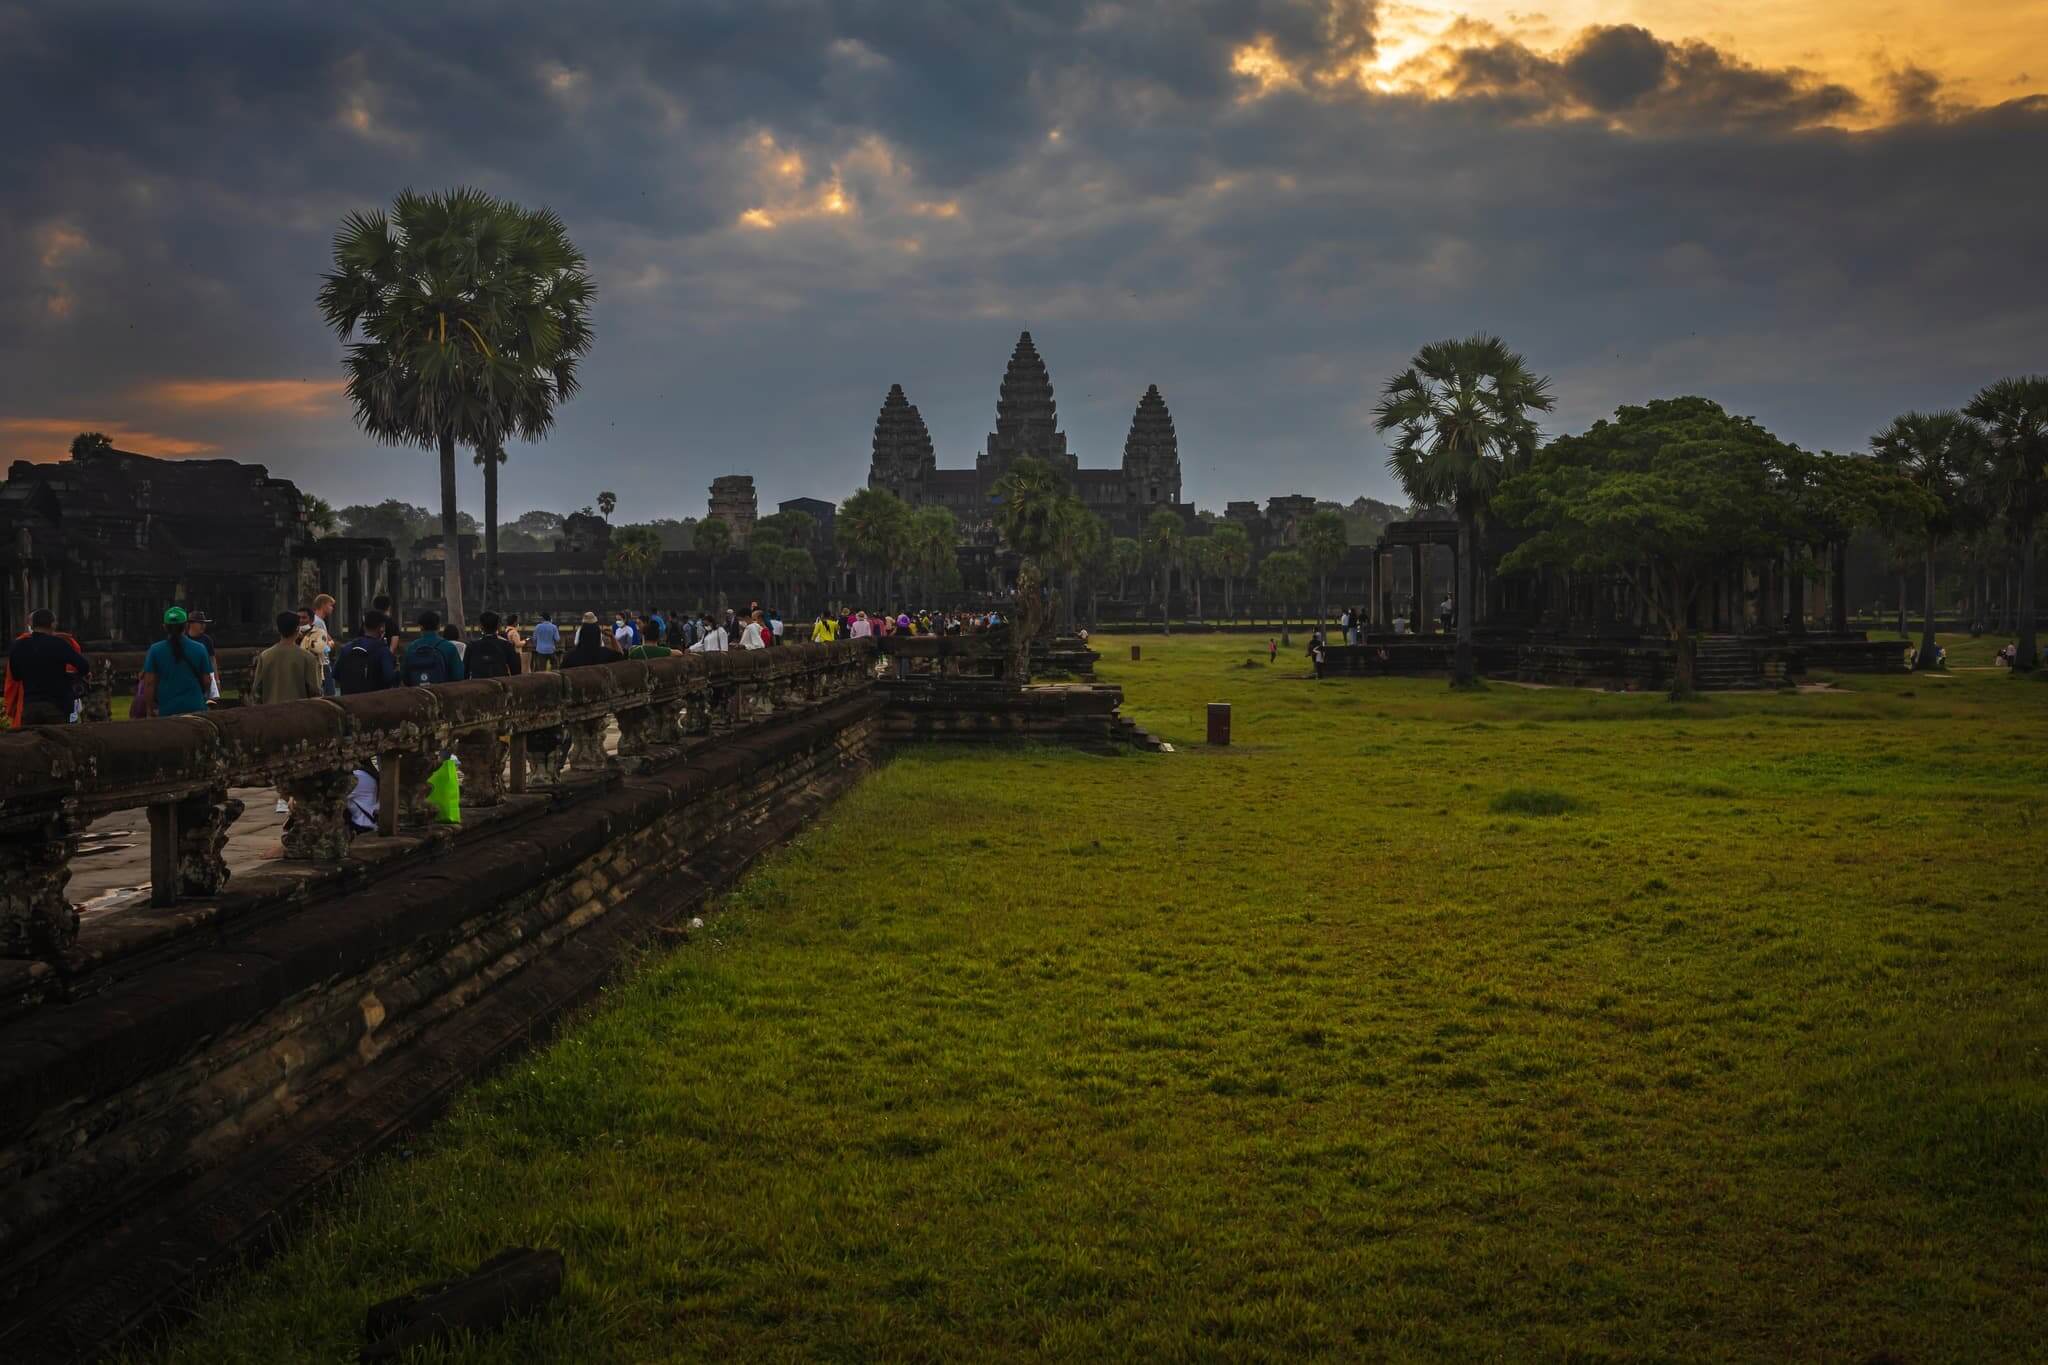 cambodia-itinerary-8-days-siem-reap-angkor-wat-4.jpeg